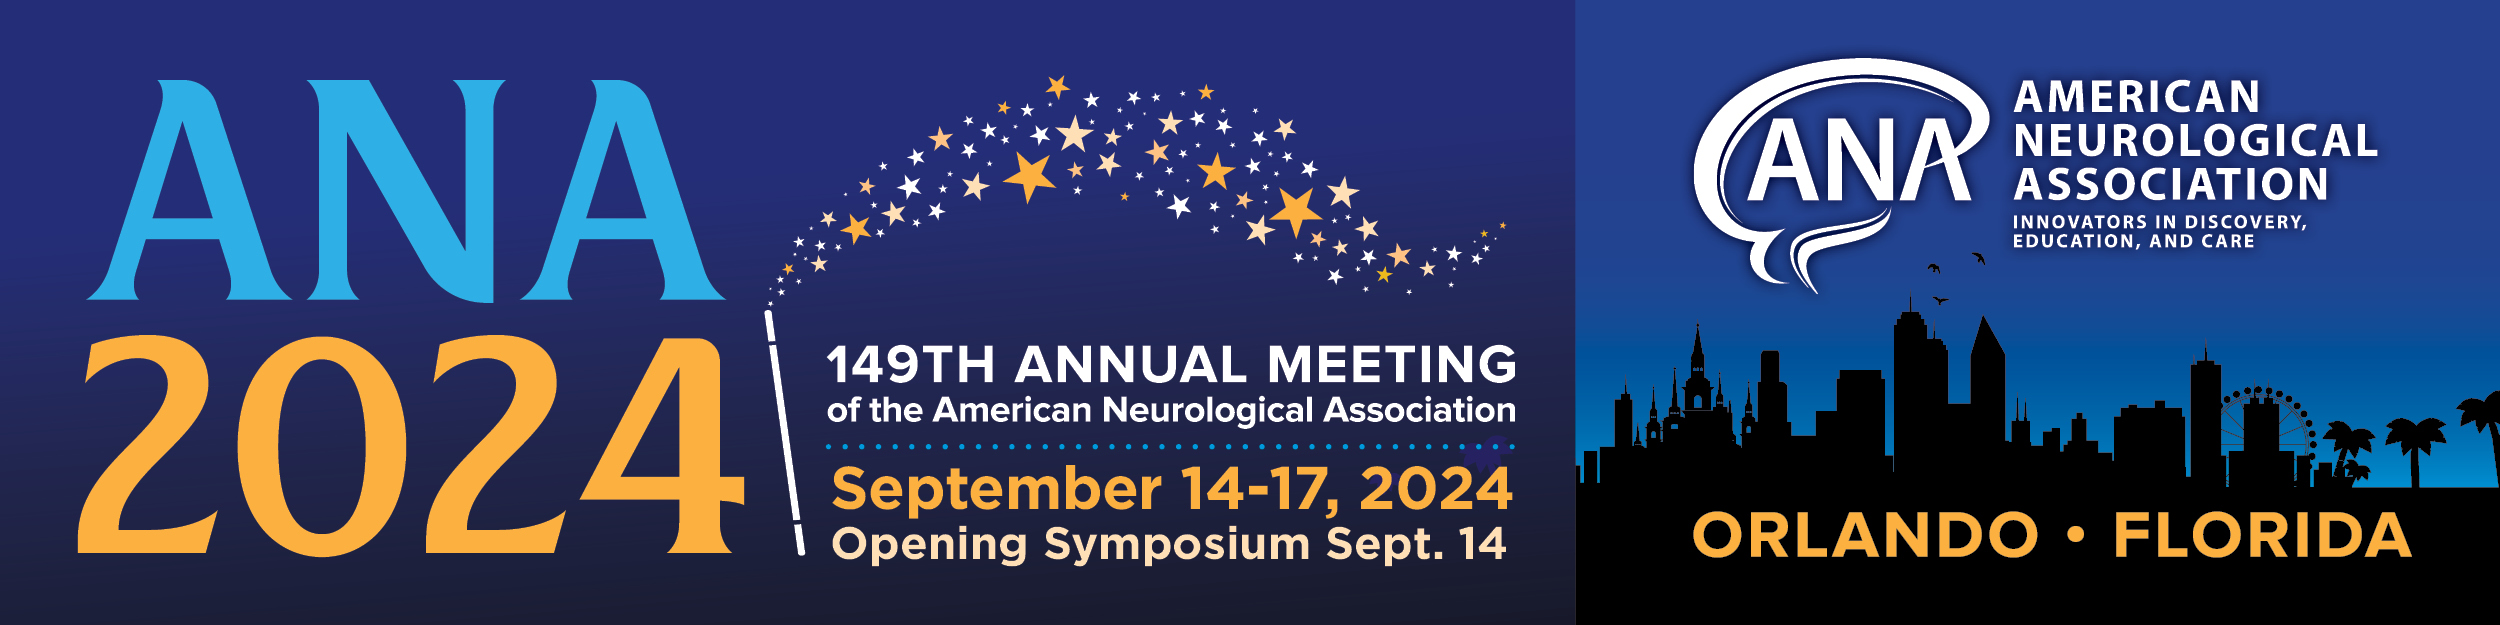 American Neurological Association Powered by AMO